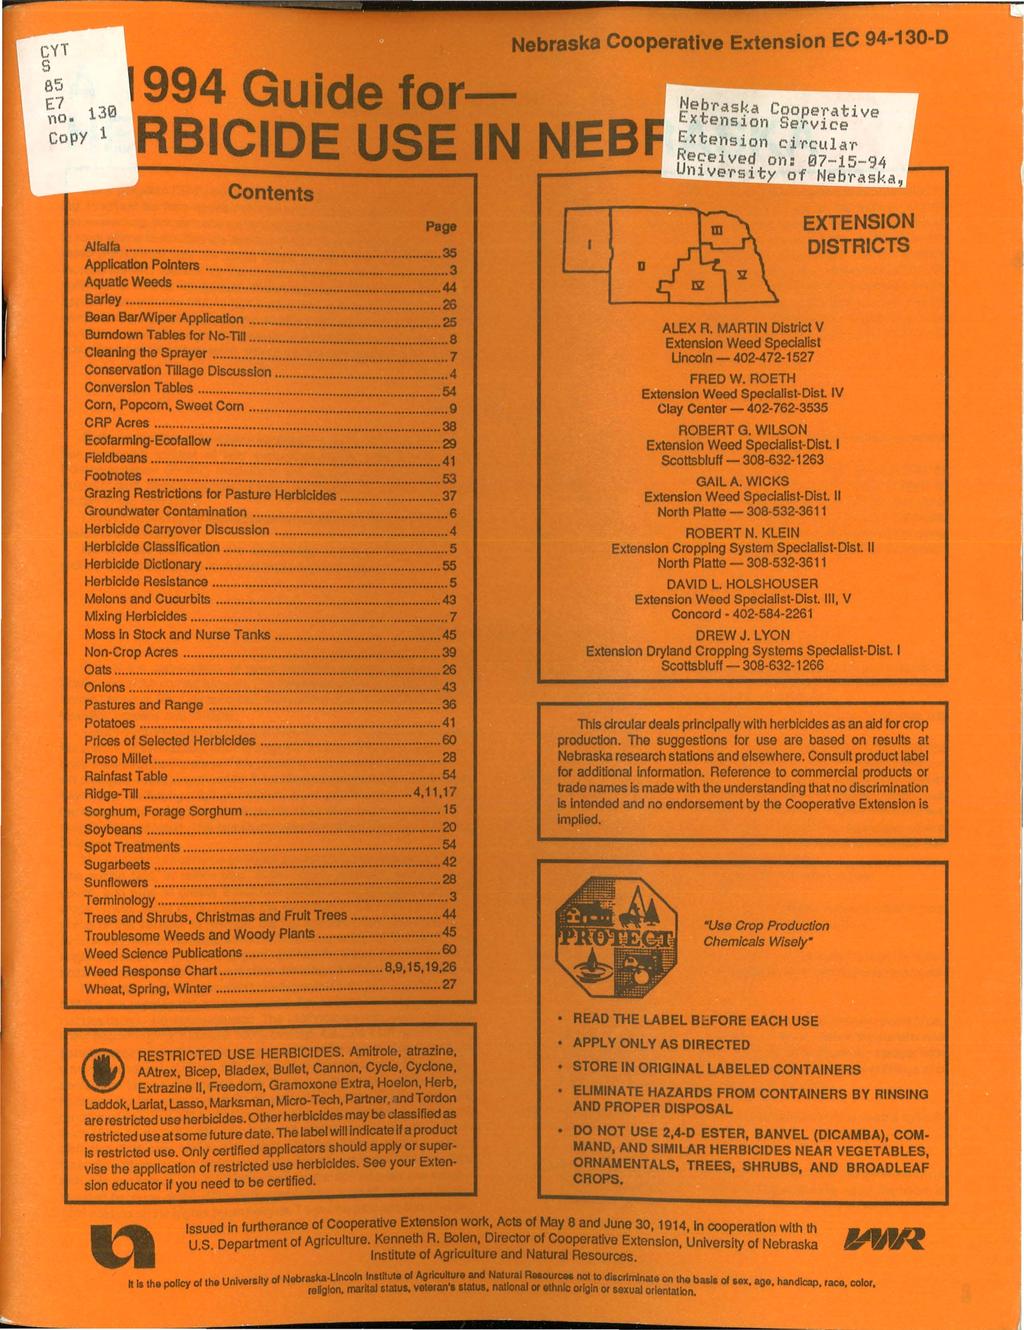 r-'"cyt s 85 E7 no. 130 copy 1 Nebraska Cooperative Extension EC 94-130-D 994 Guide f RBICIDE USE IN NEB etbasa... Contents Page Alfalfa................................ 35 Application Pointers.